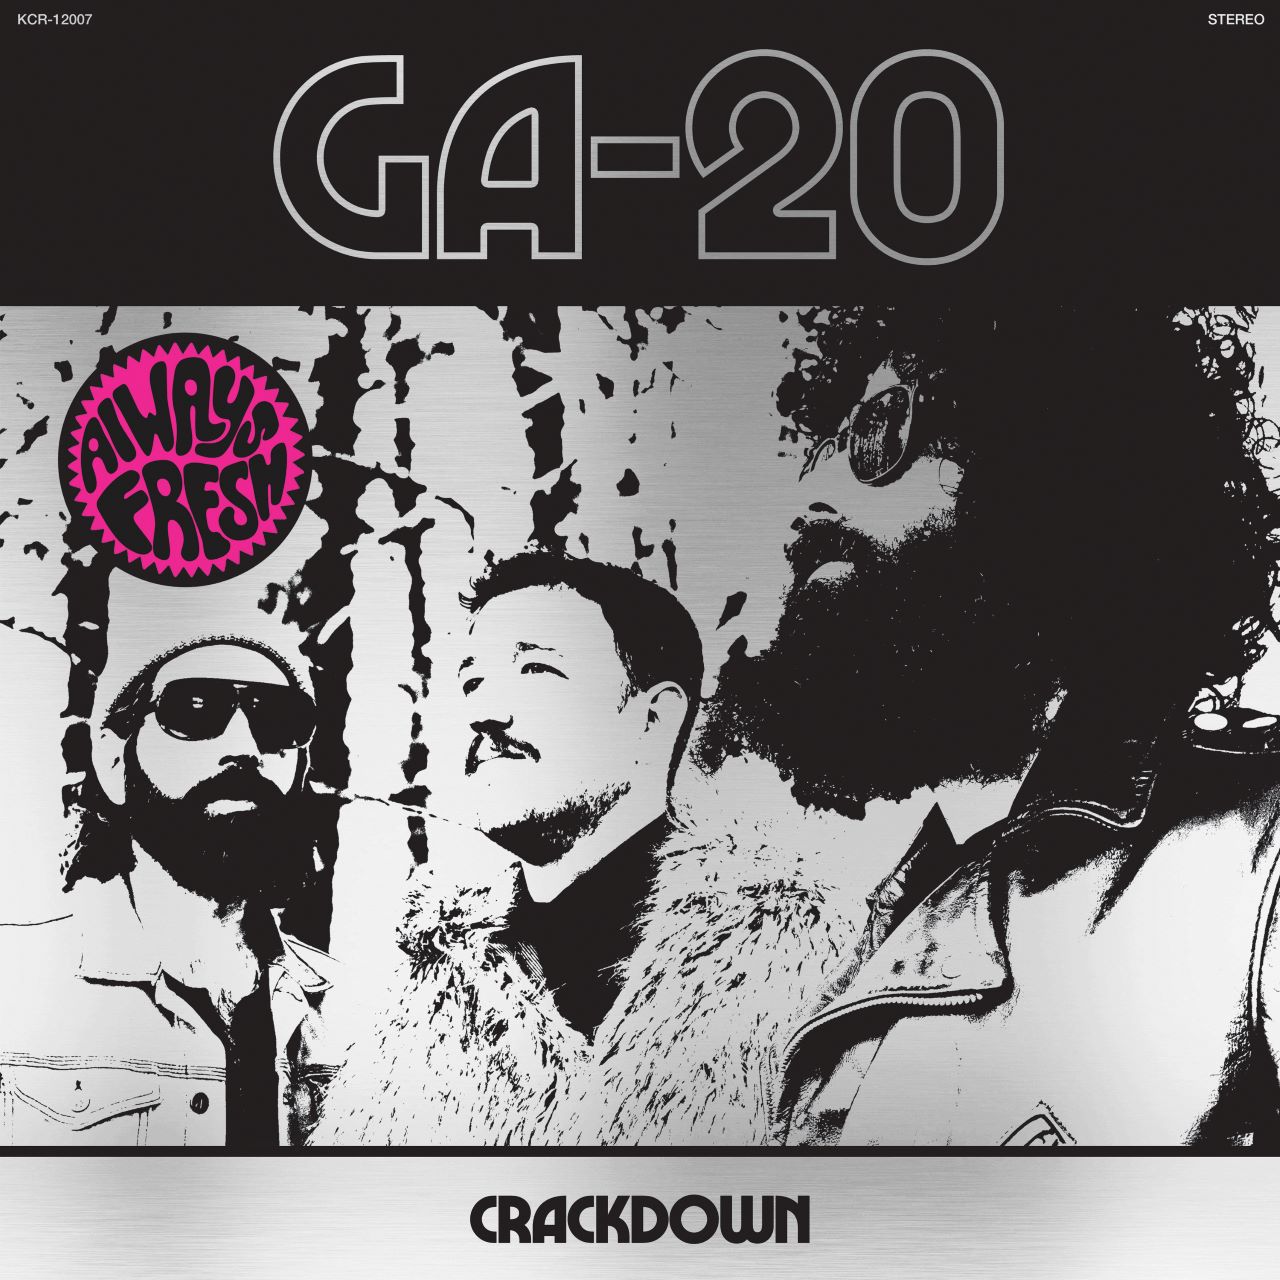 GA-20 - Crackdown cover album